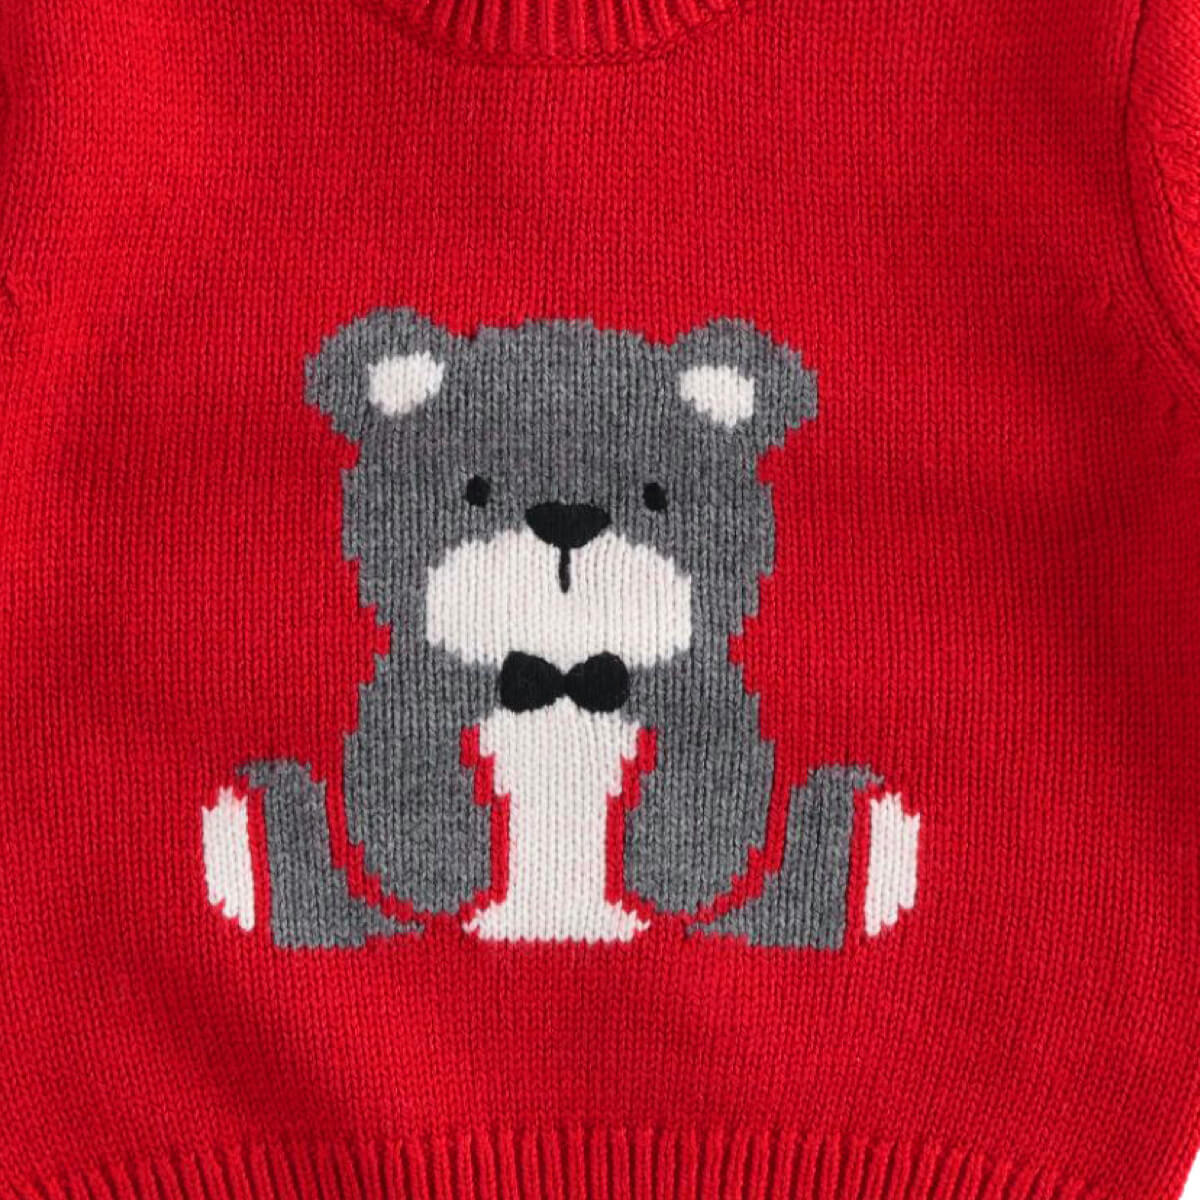 Minibanda Baby Boys Red Sweater